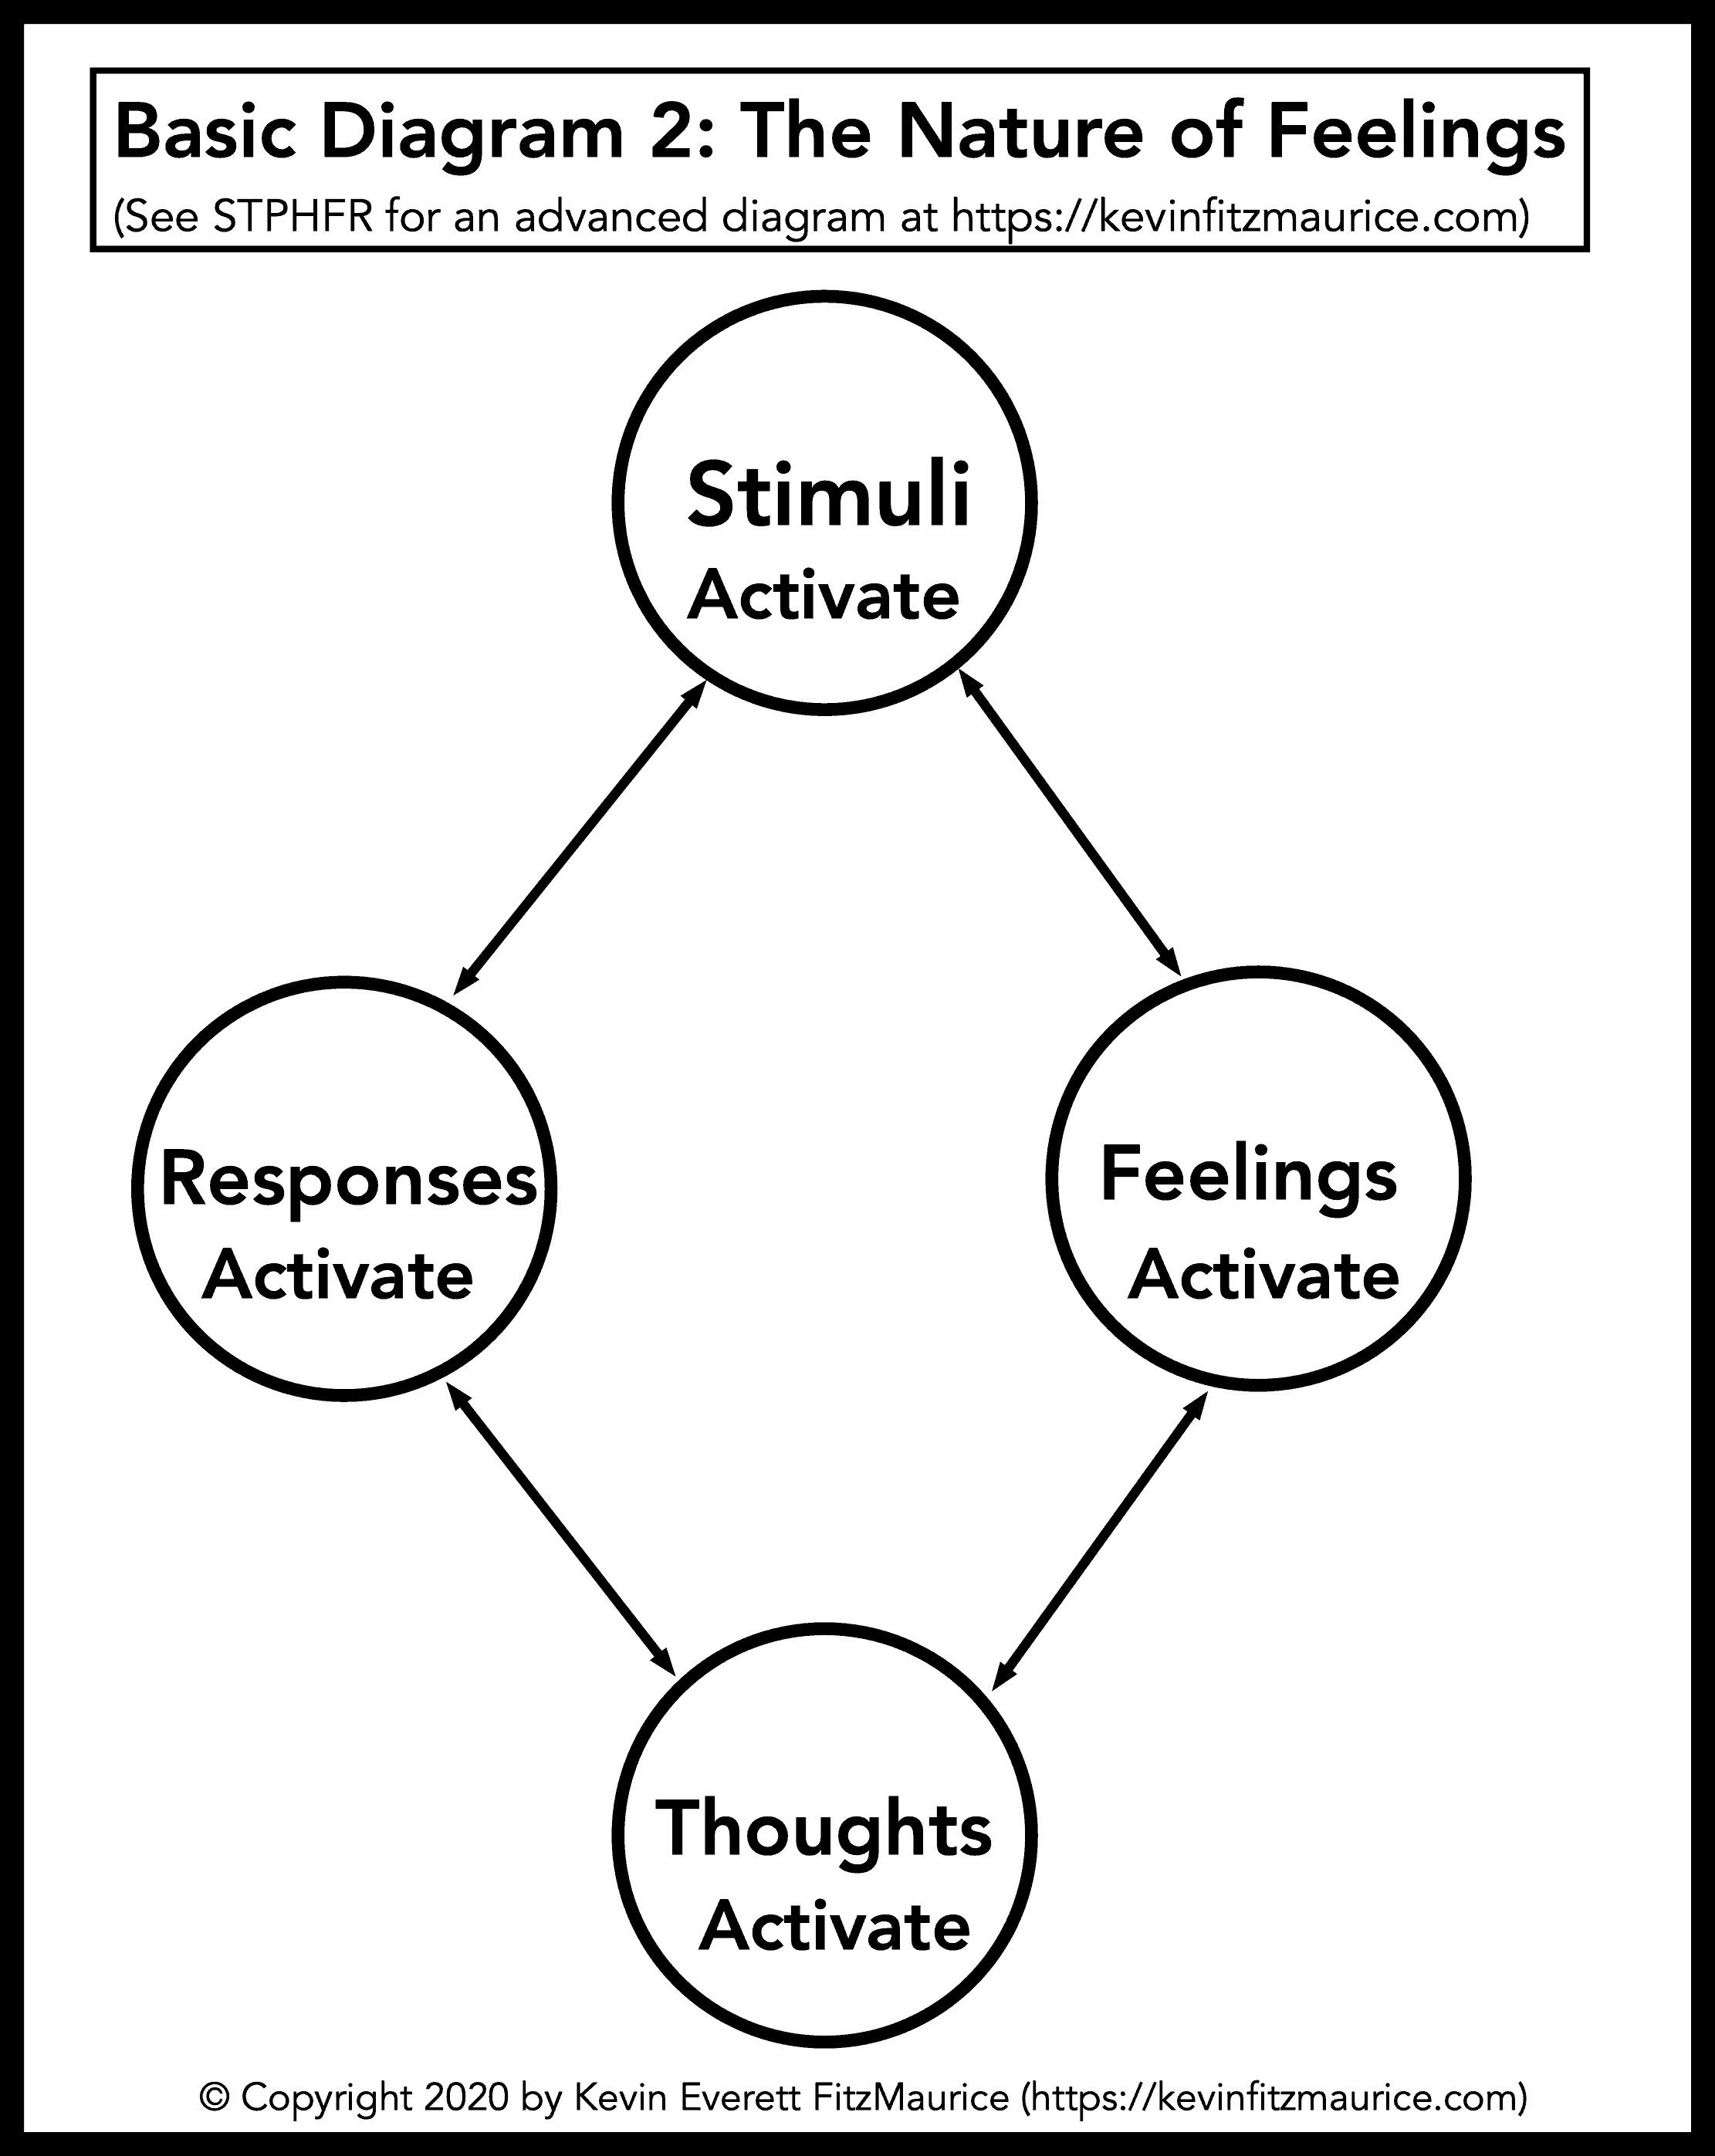 The Second Basic Diagram of Feelings